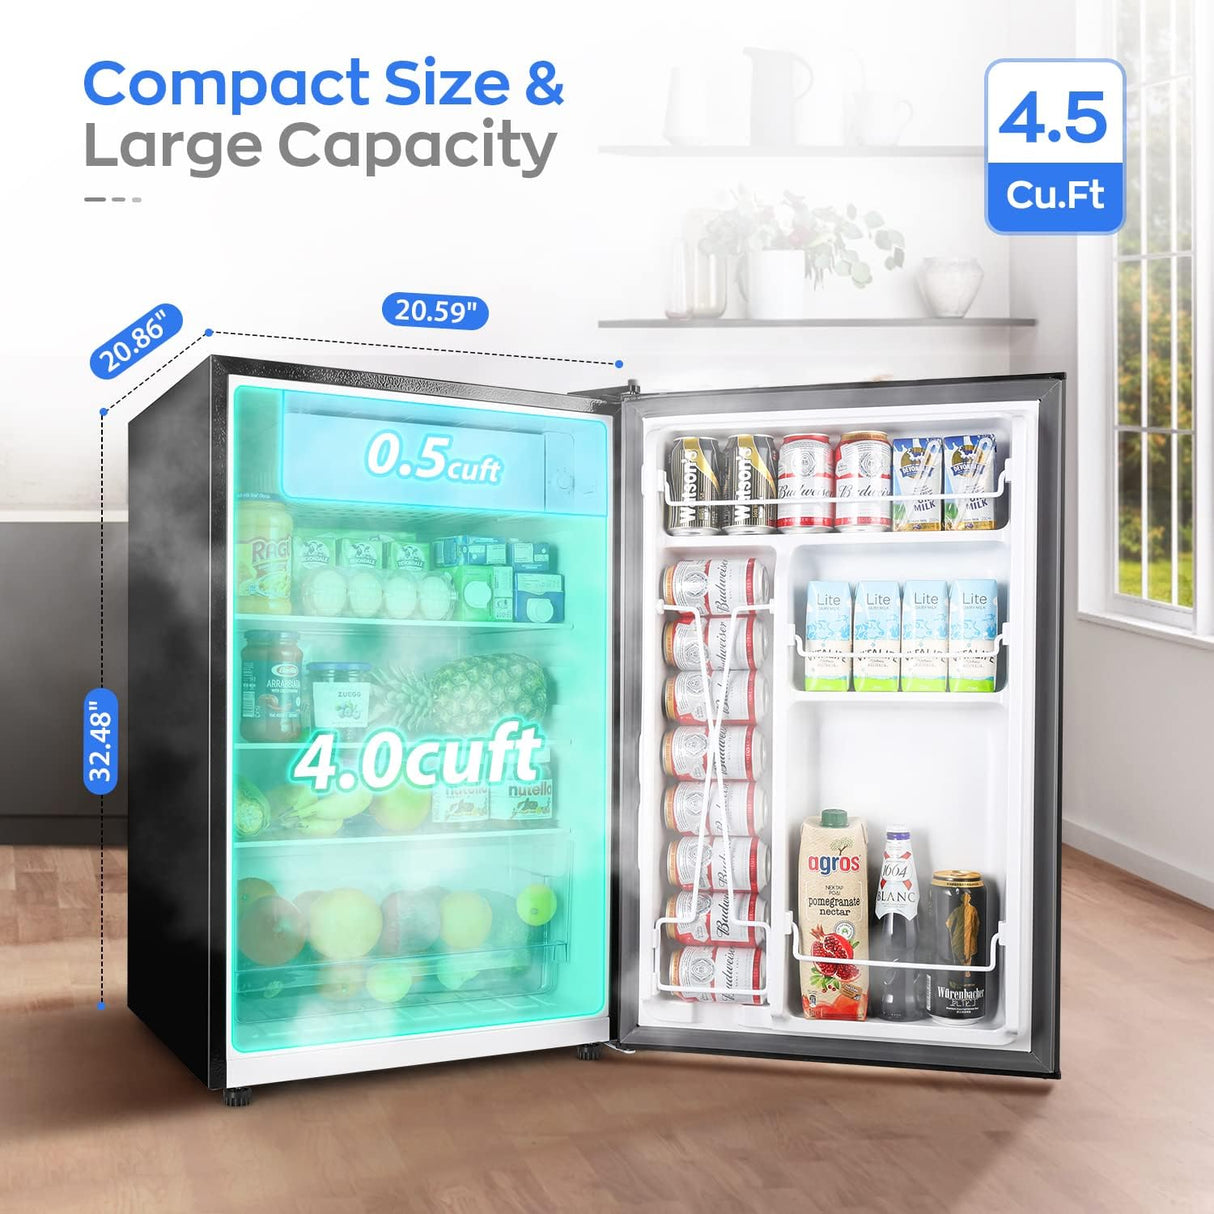 Upstreman 4.5 Cu.Ft Compact Refrigerator, Silver-SR45